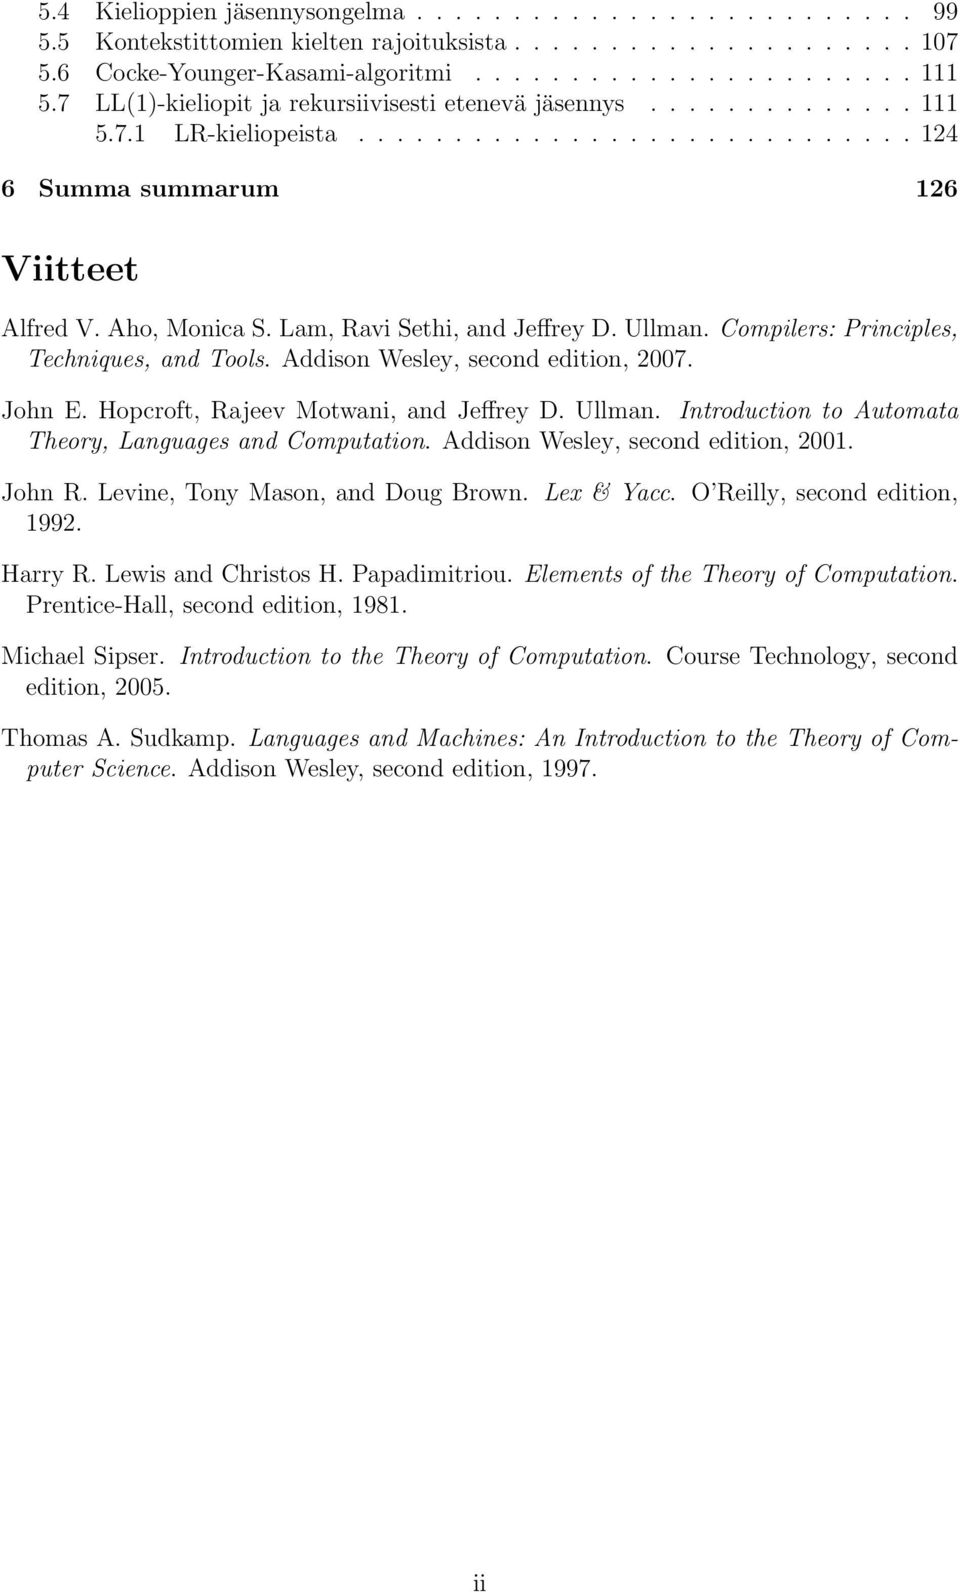 Lm, Rvi Sethi, nd Jeffrey D. Ullmn. Compilers: Principles, Techniques, nd Tools. Addison Wesley, second edition, 2007. John E. Hopcroft, Rjeev Motwni, nd Jeffrey D. Ullmn. Introduction to Automt Theory, Lnguges nd Computtion.